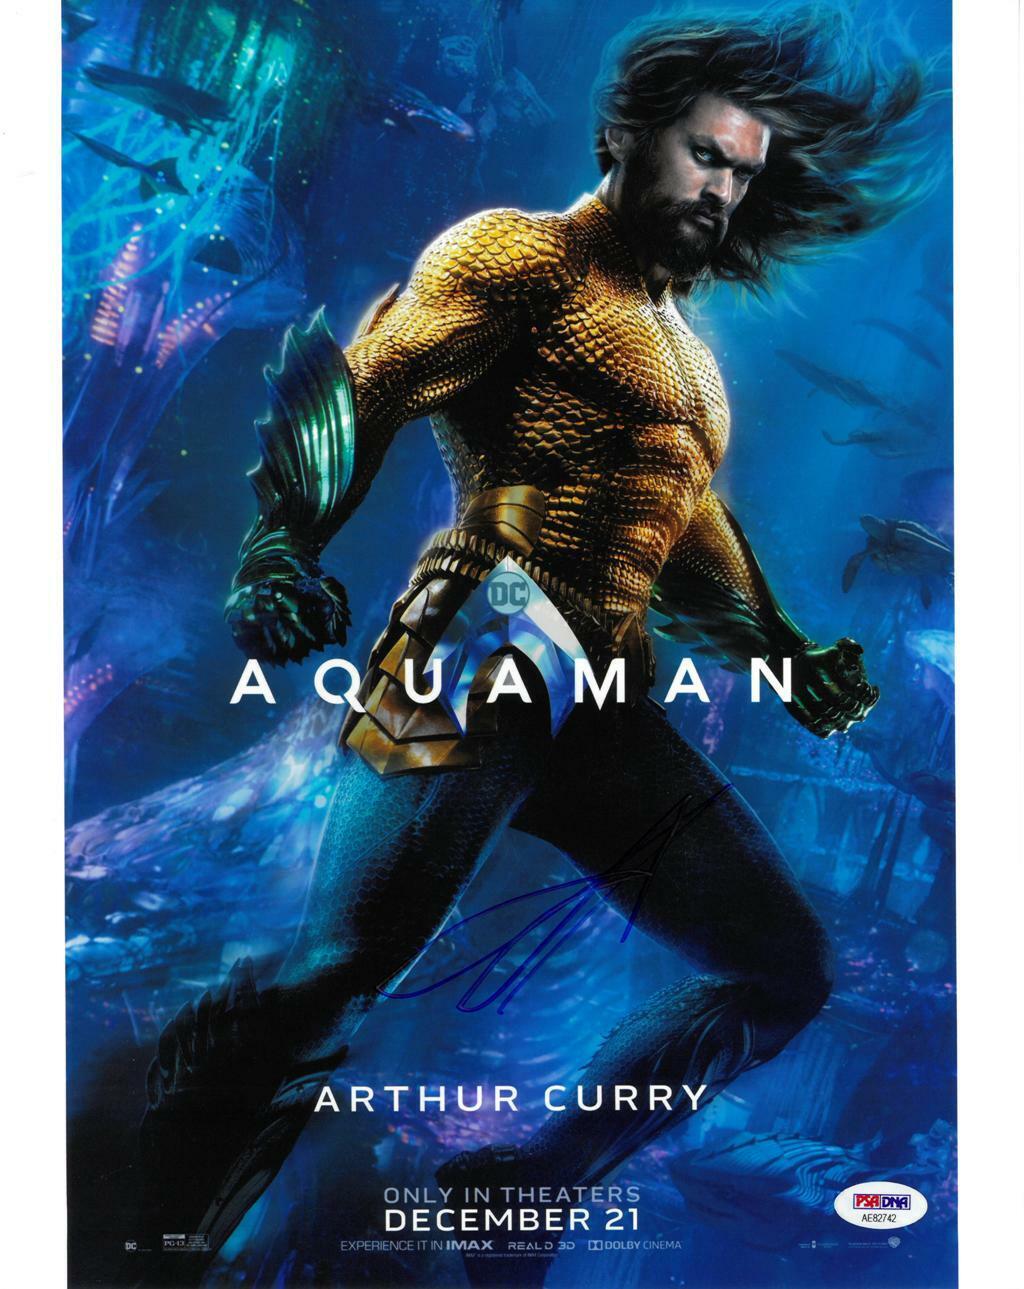 Jason Momoa Signed Aquaman Authentic Autographed 11x14 Photo Poster painting PSA/DNA #AE82742